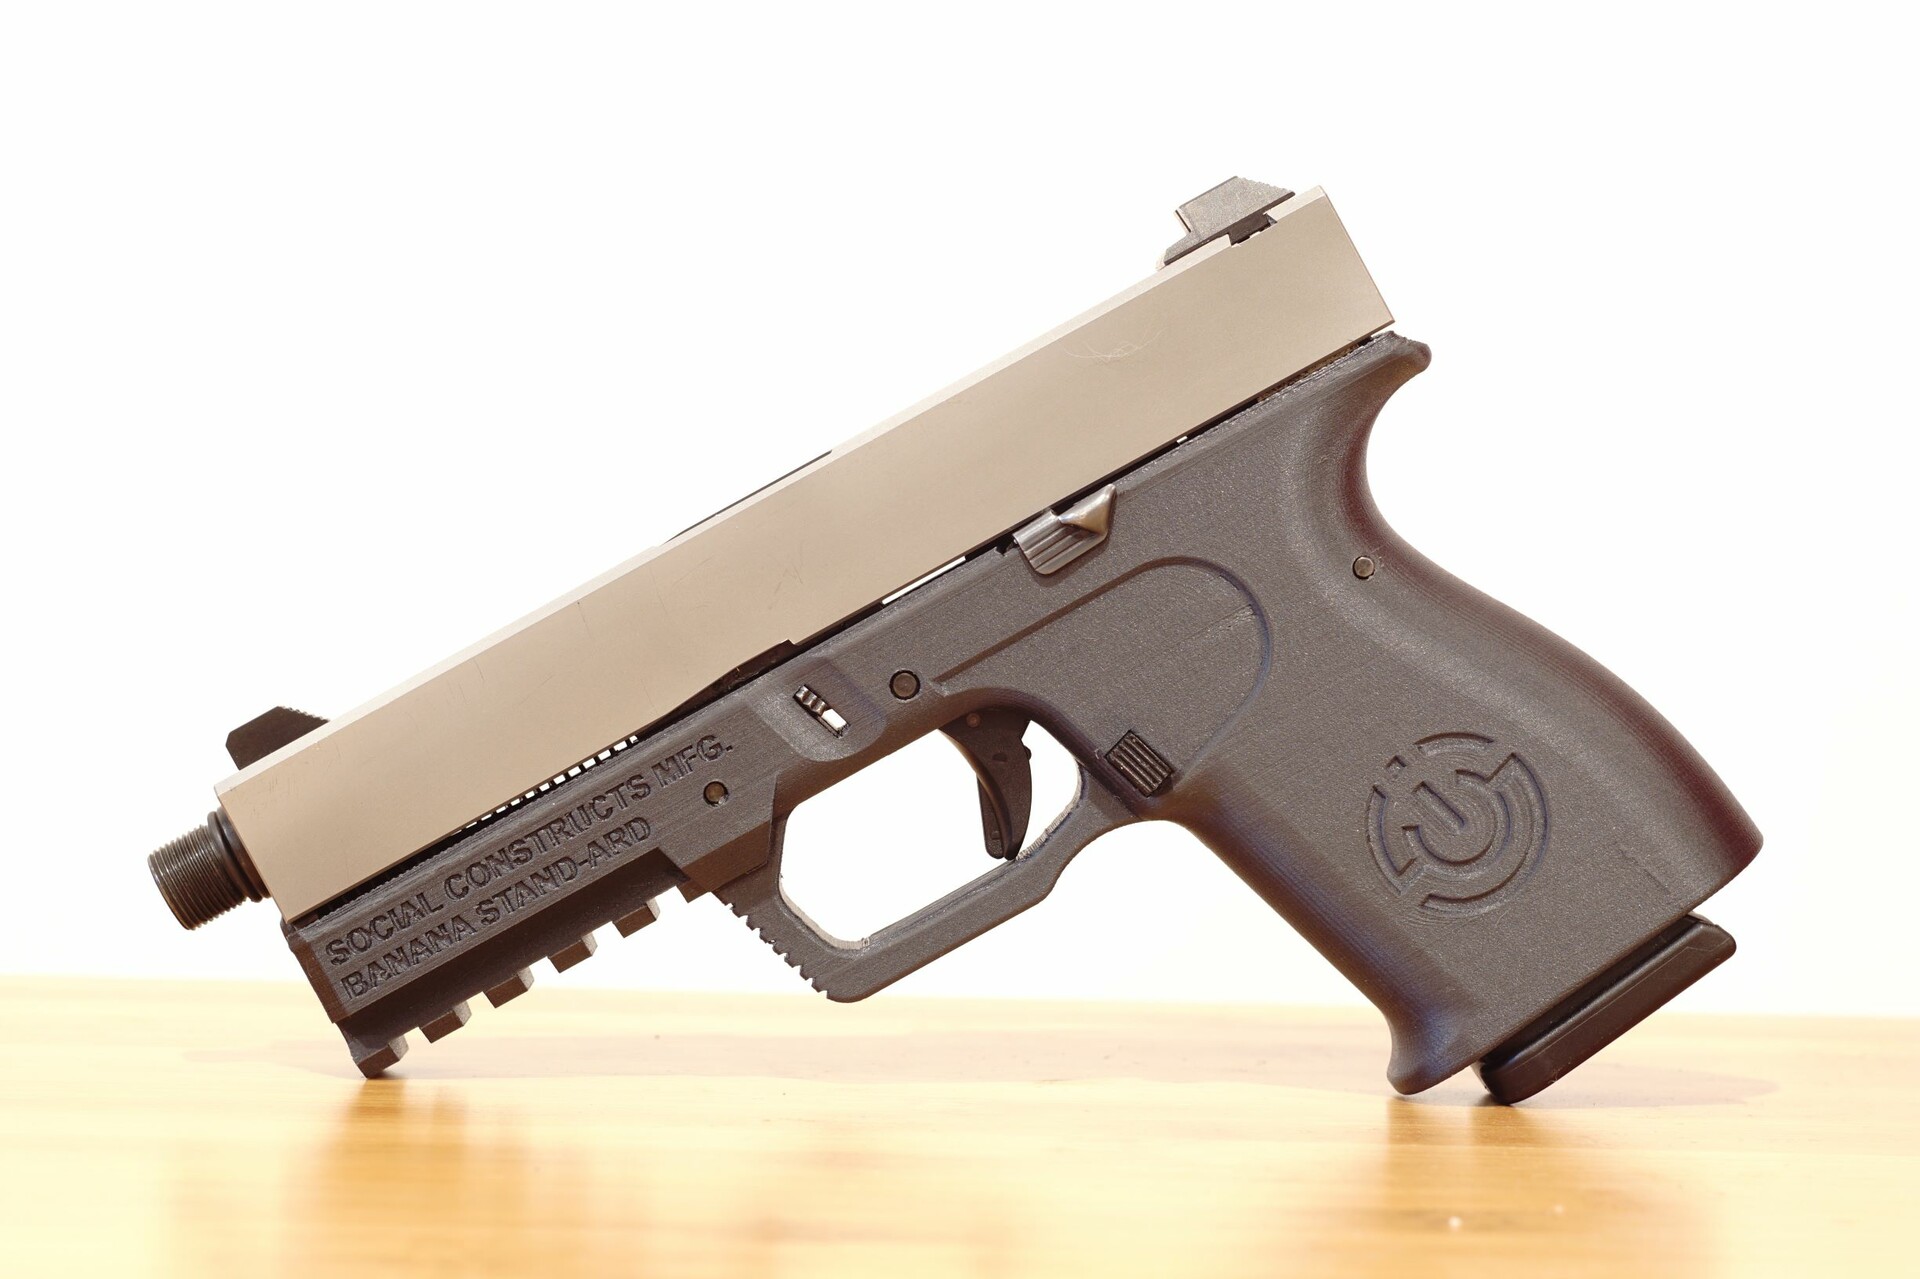 3D Printed Glock 19, Pistol Design.